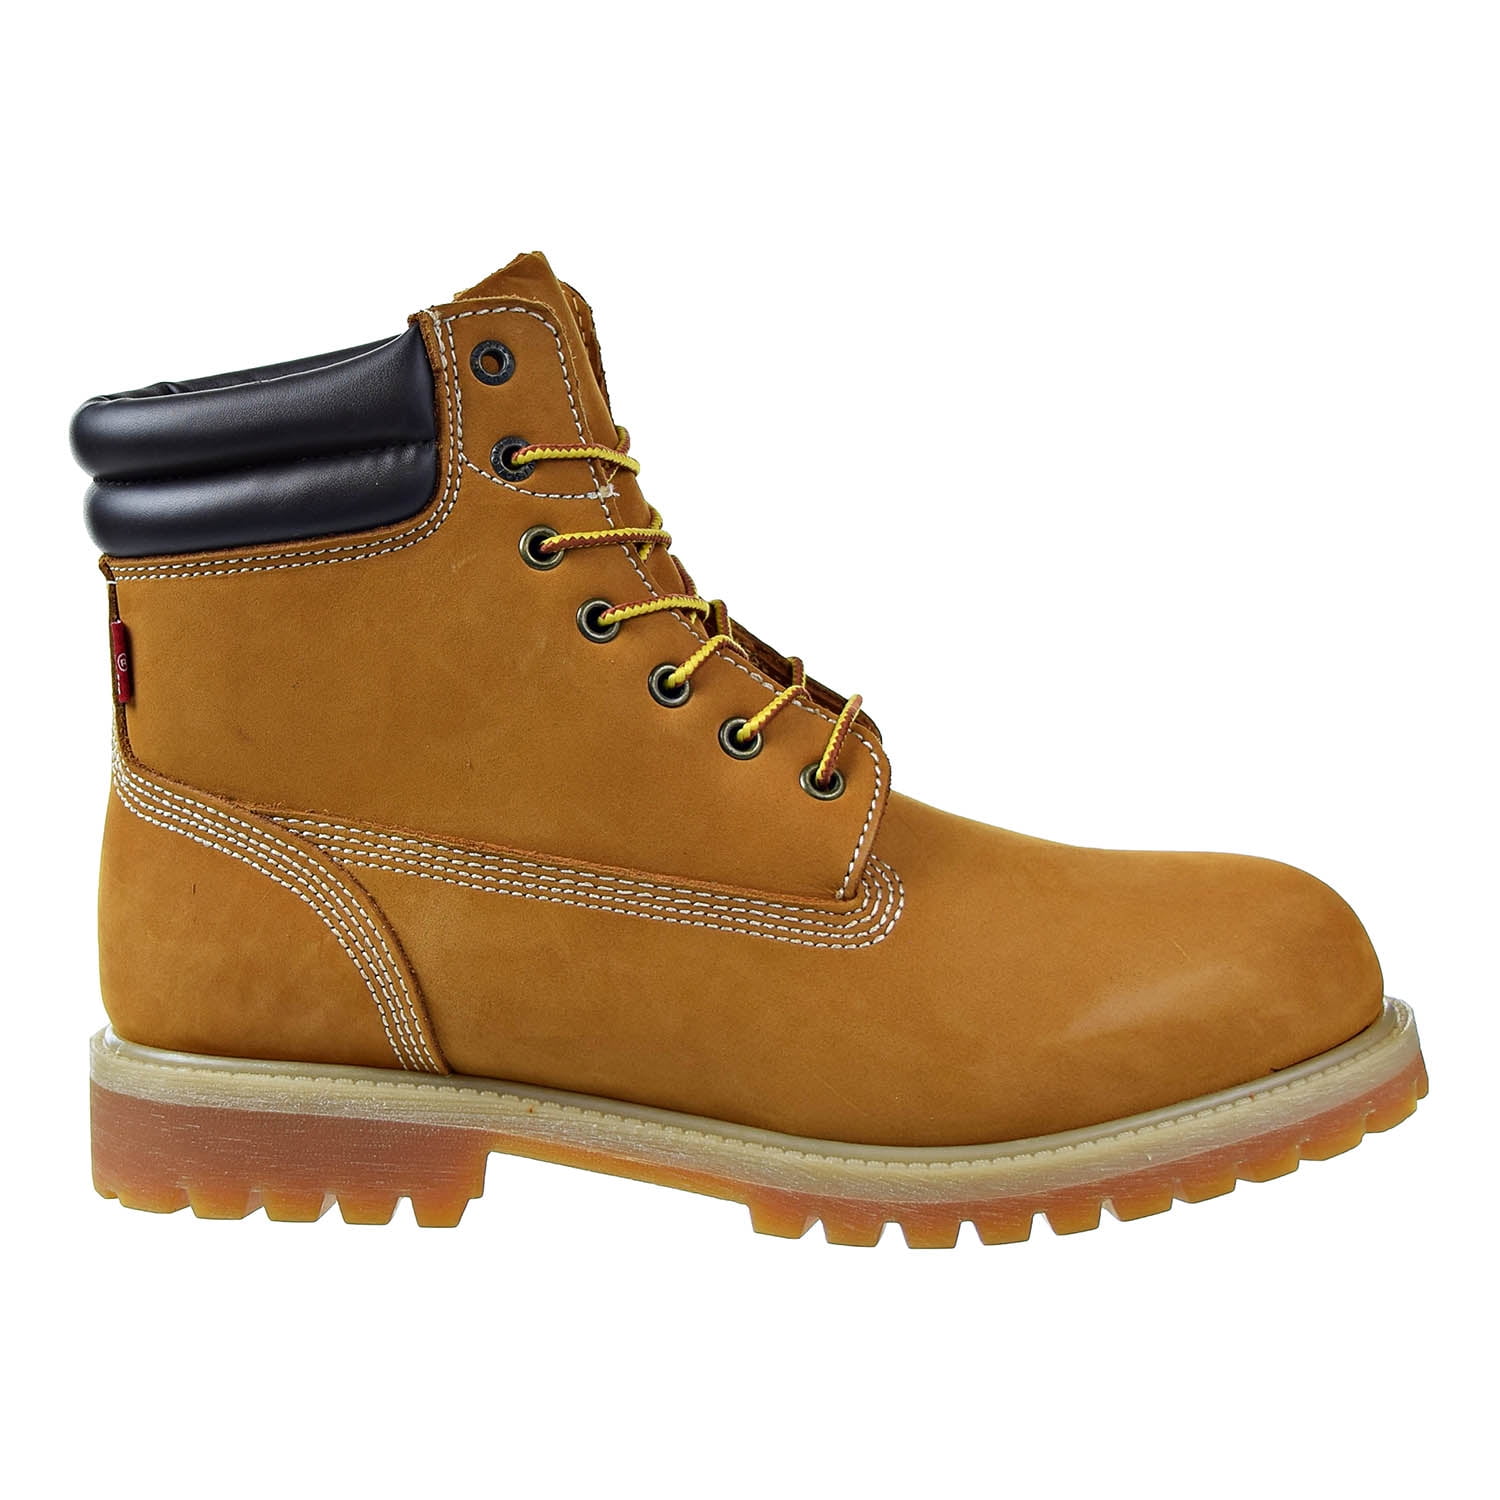 Levi's Harrison Engineer Men's Boots Wheat 517190-11b